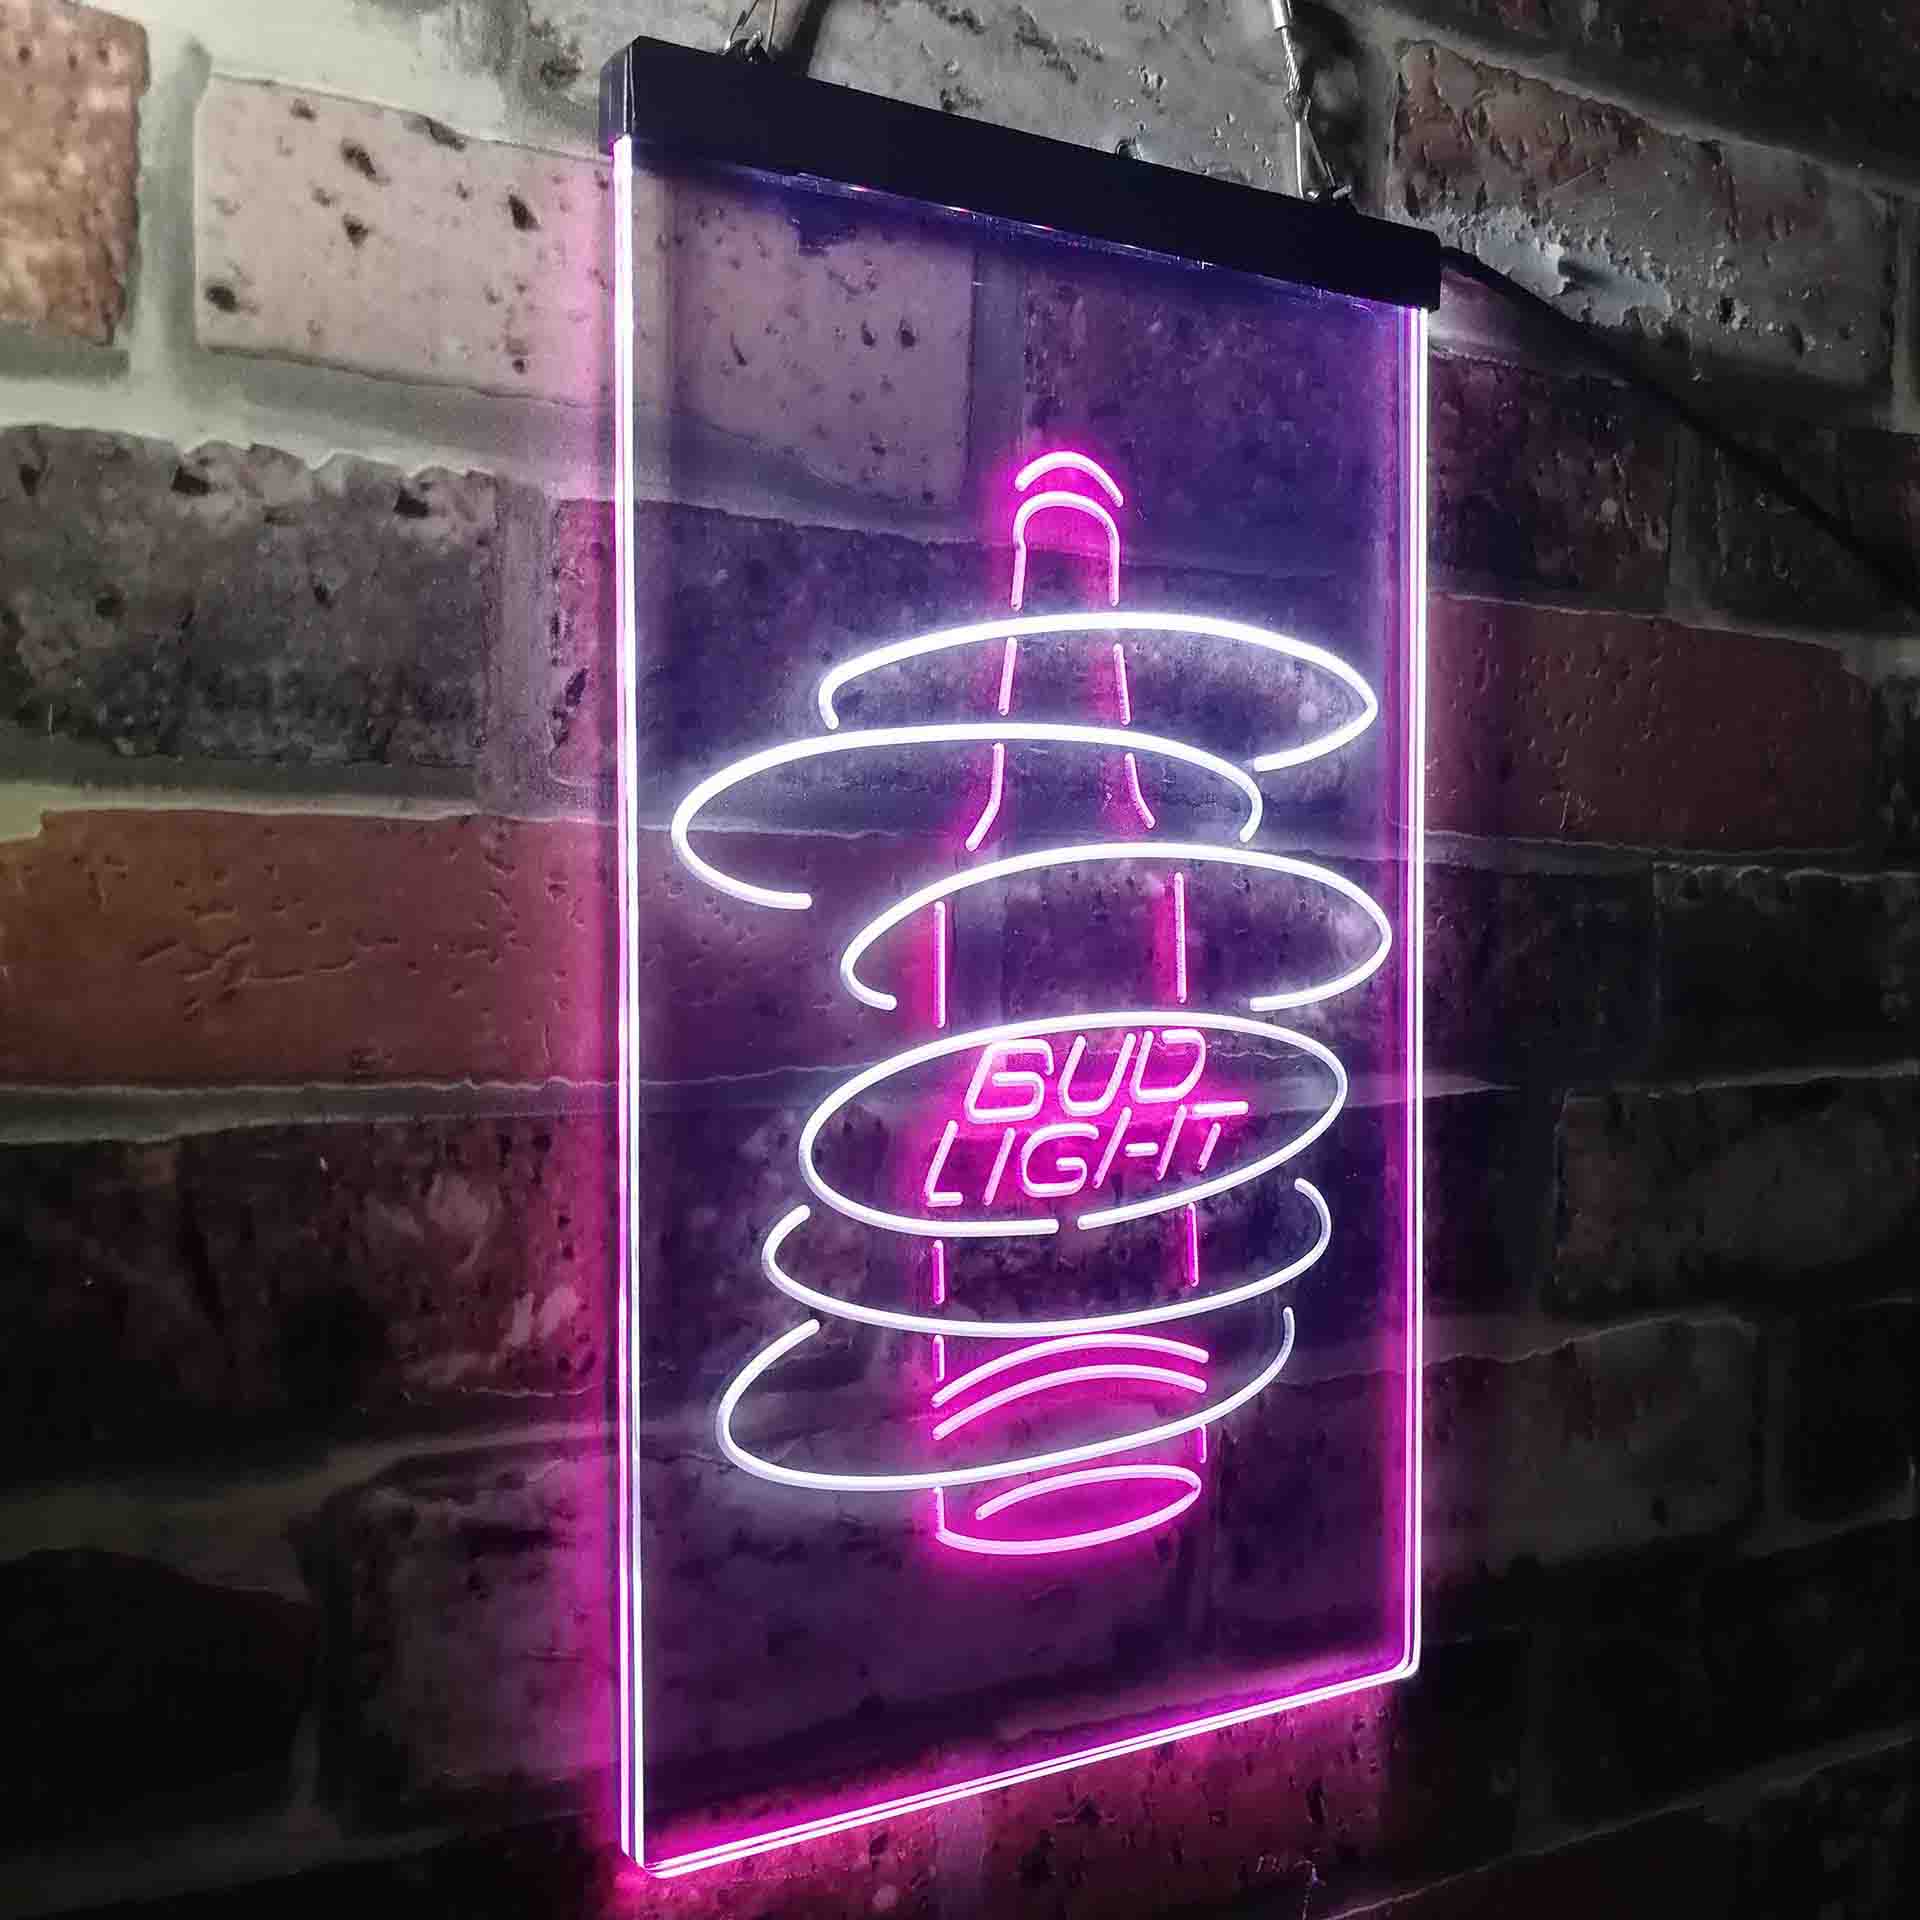 Bud Light Bottle Neon-Like LED Sign - ProLedSign